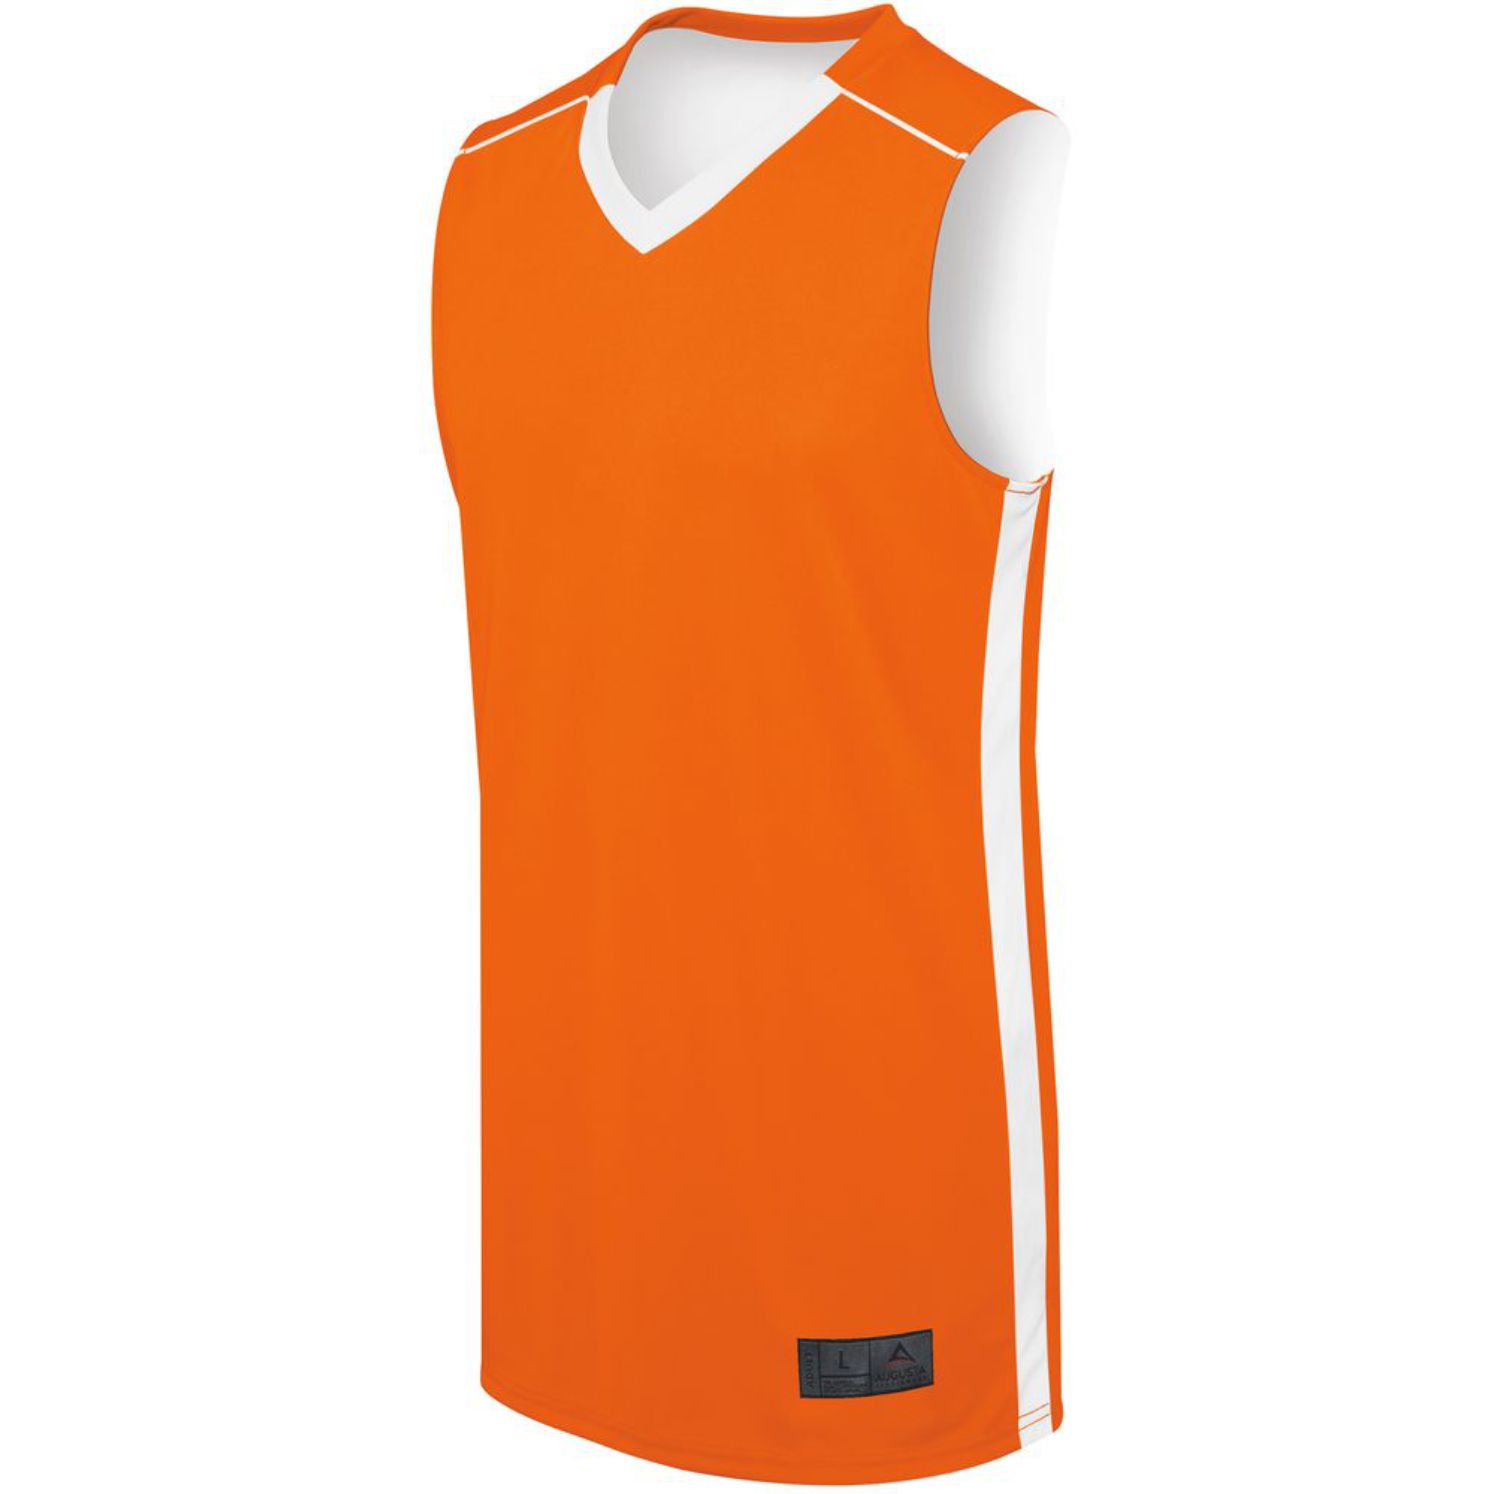 Augusta Sportswear Adult Competition Reversible Jersey #332400 Orange / White